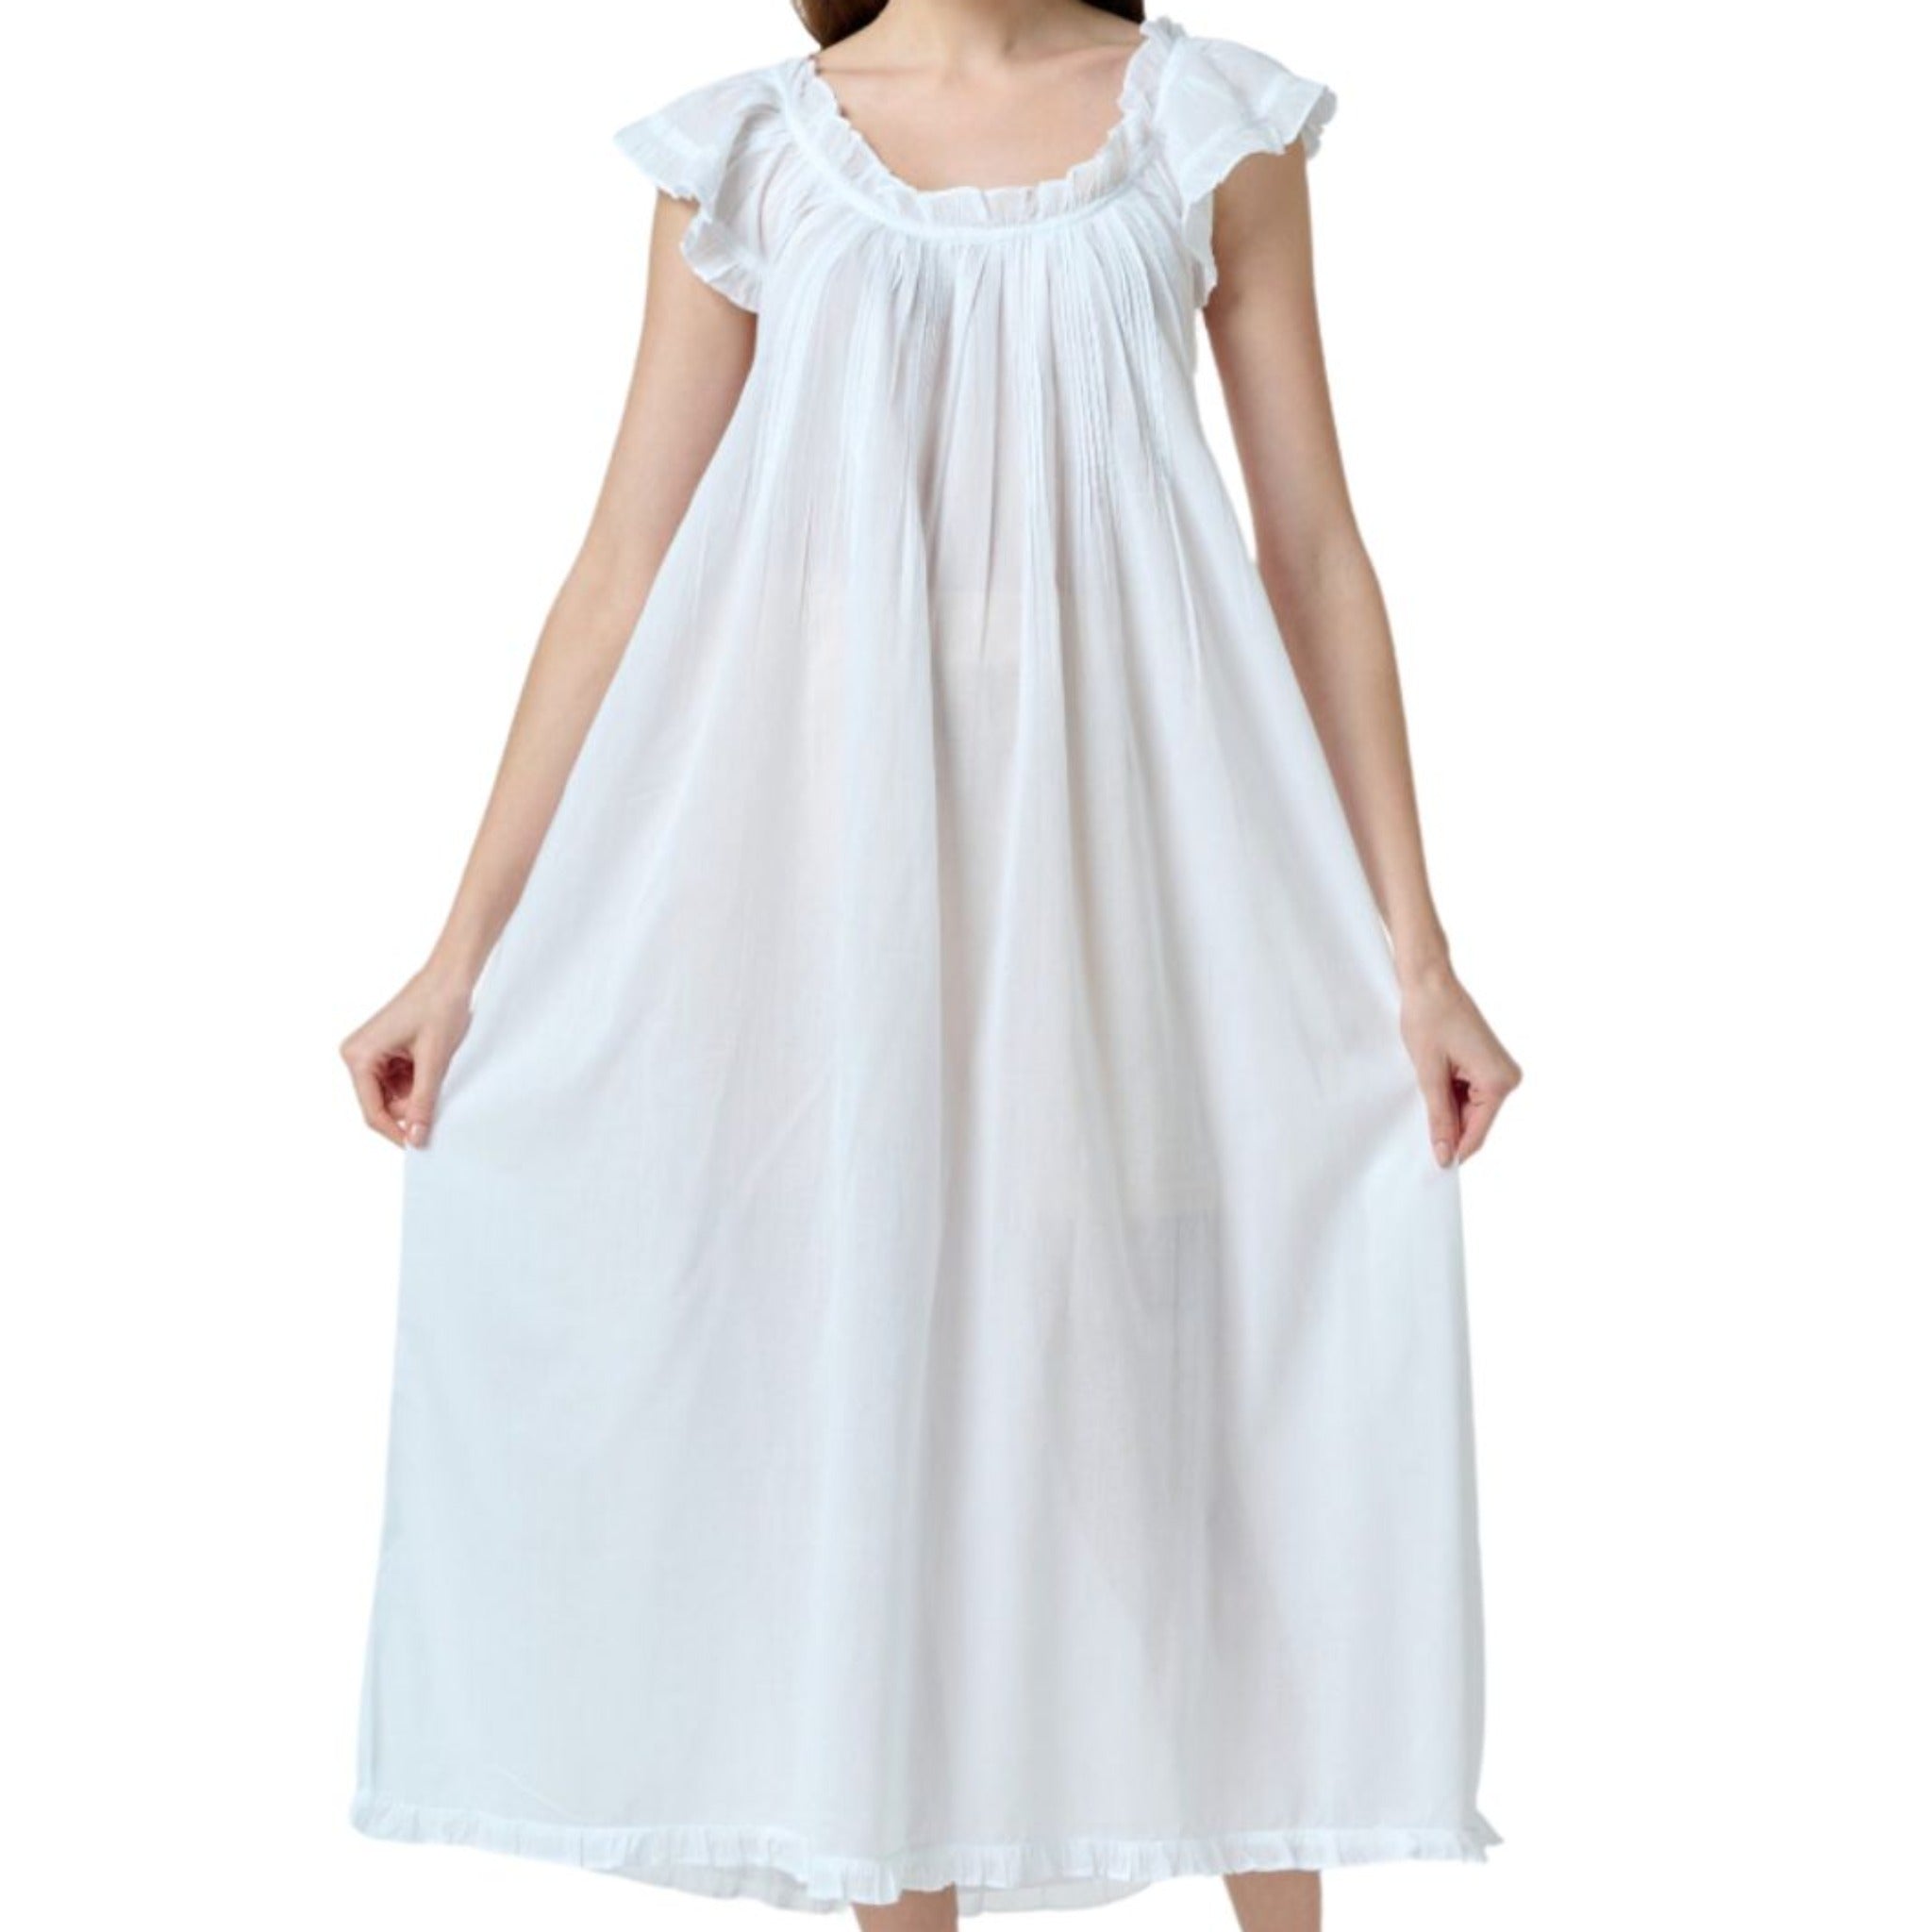 Bille sexlife white cotton night gown 